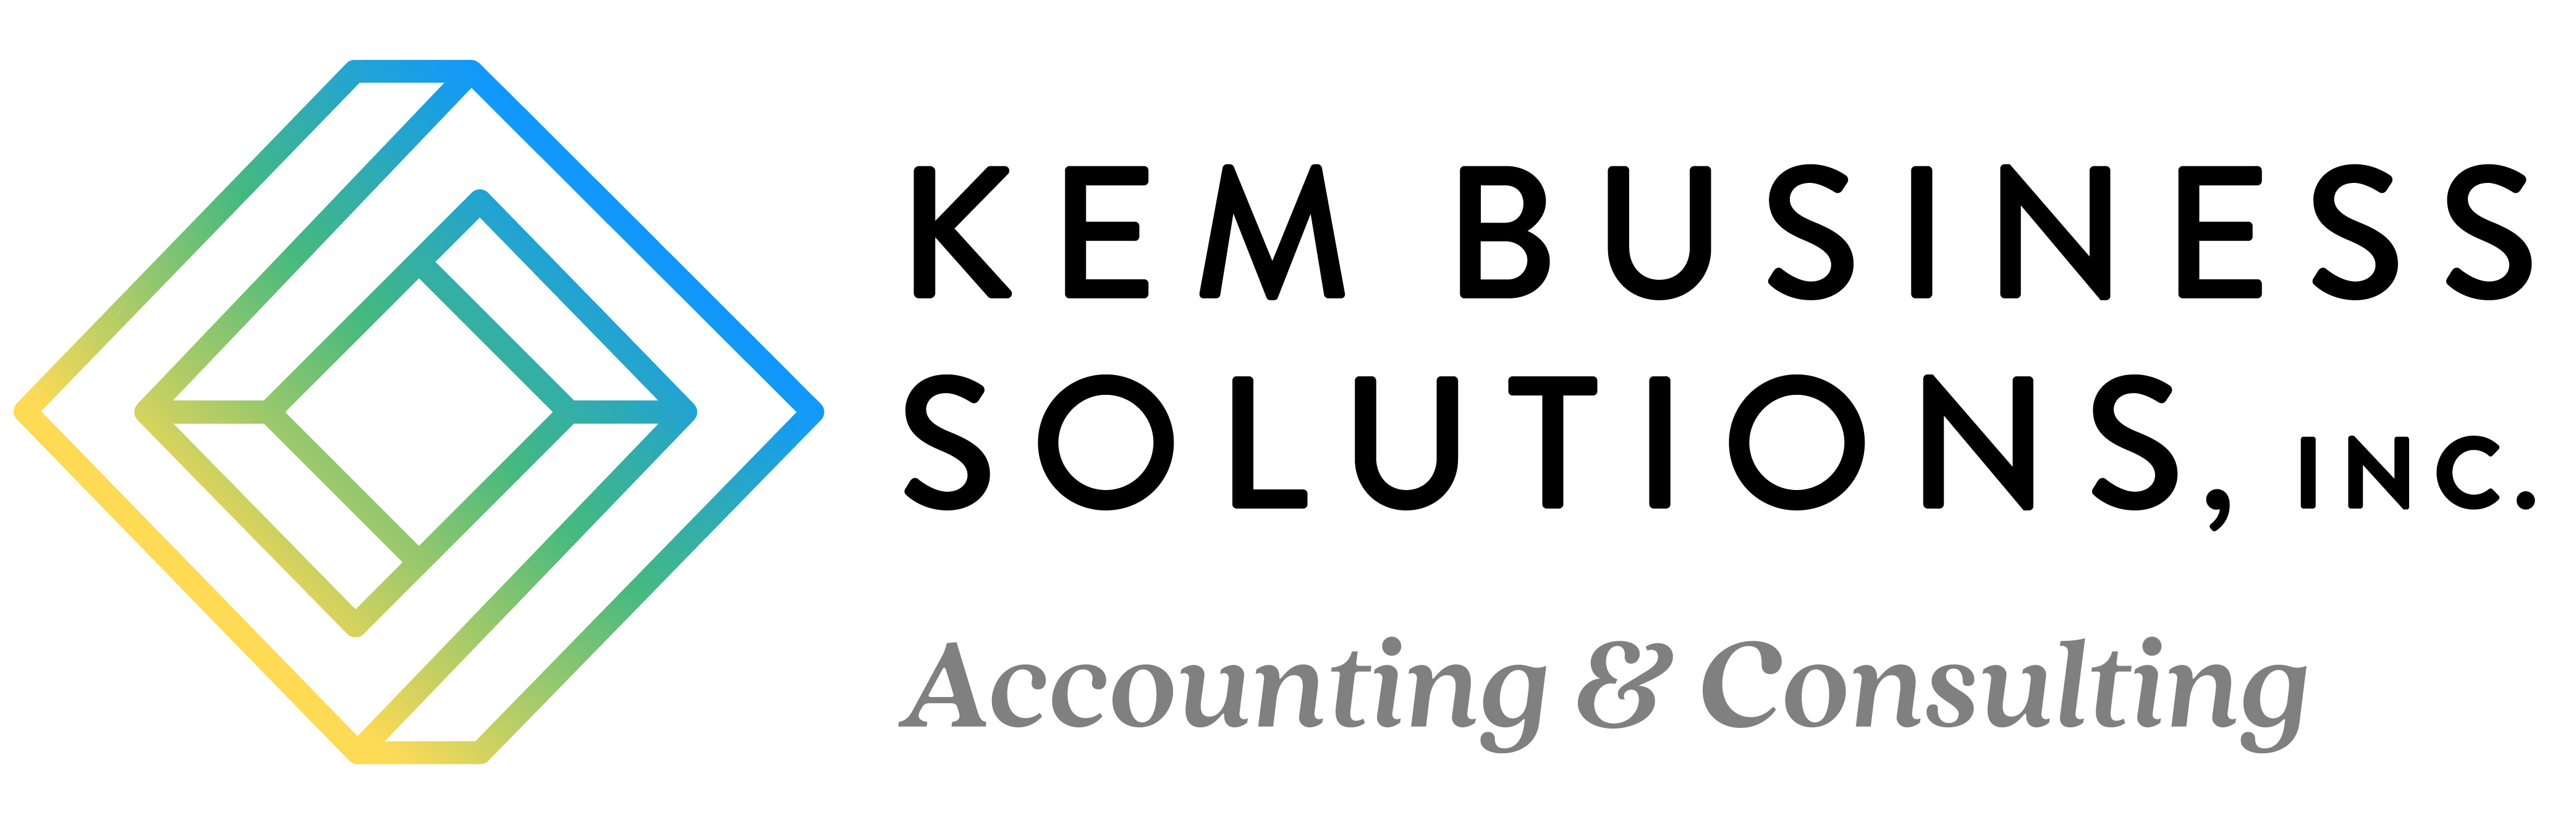 KEM_MainLogo-Tagline-FullColor - KEM Business Solutions, Inc.